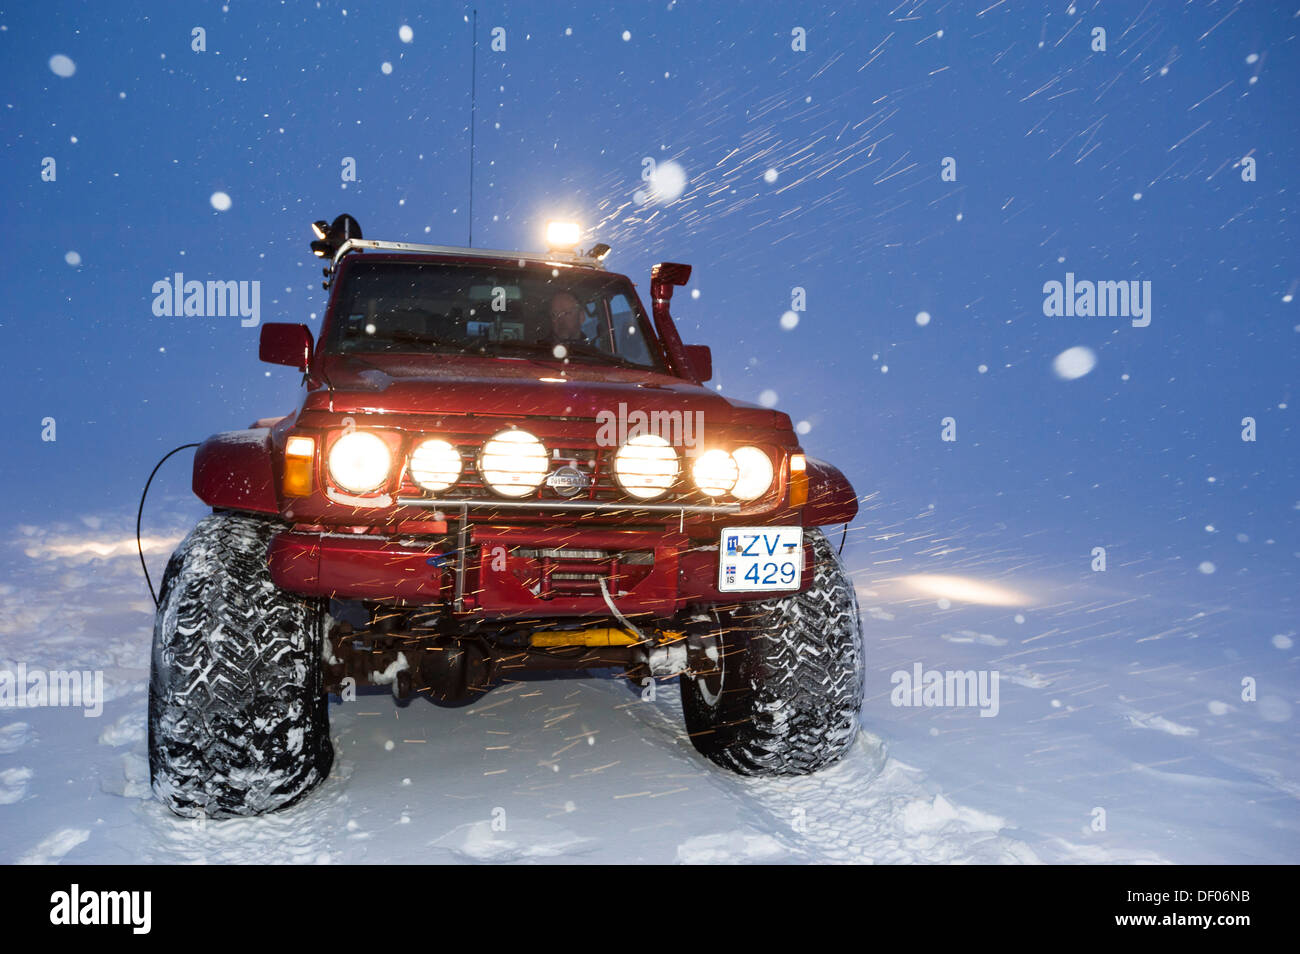 Super Jeep dans une tempête de neige, hiver, paysage, Glacier Vatnajoekull Highlands islandais, Islande, Europe Banque D'Images